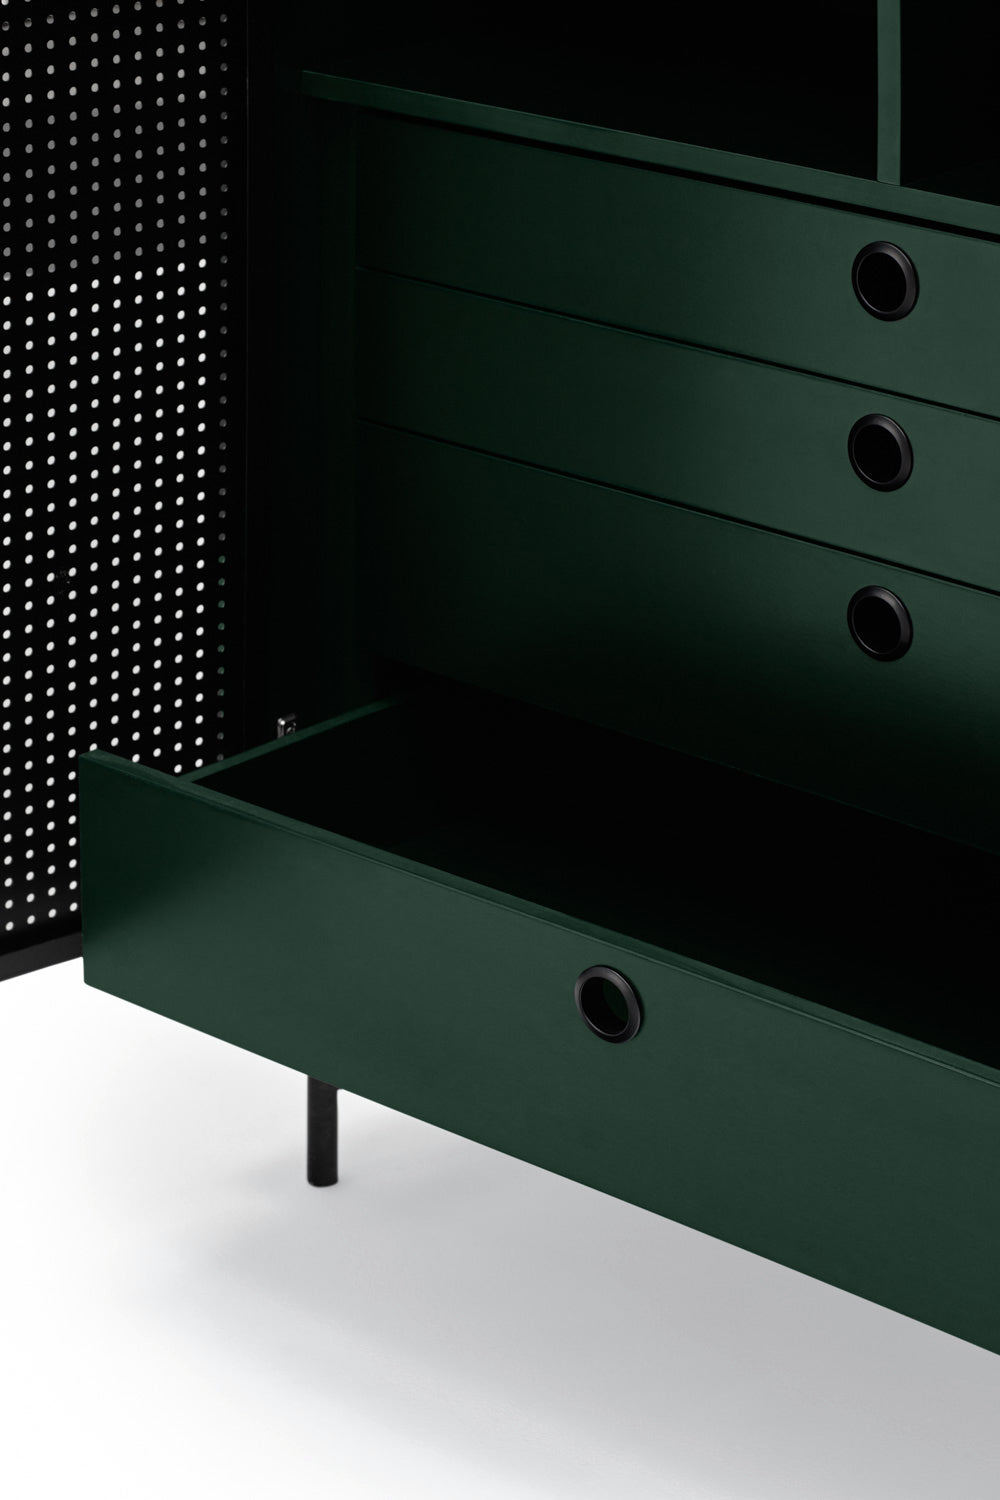 PUNTO high chest of drawers dark green